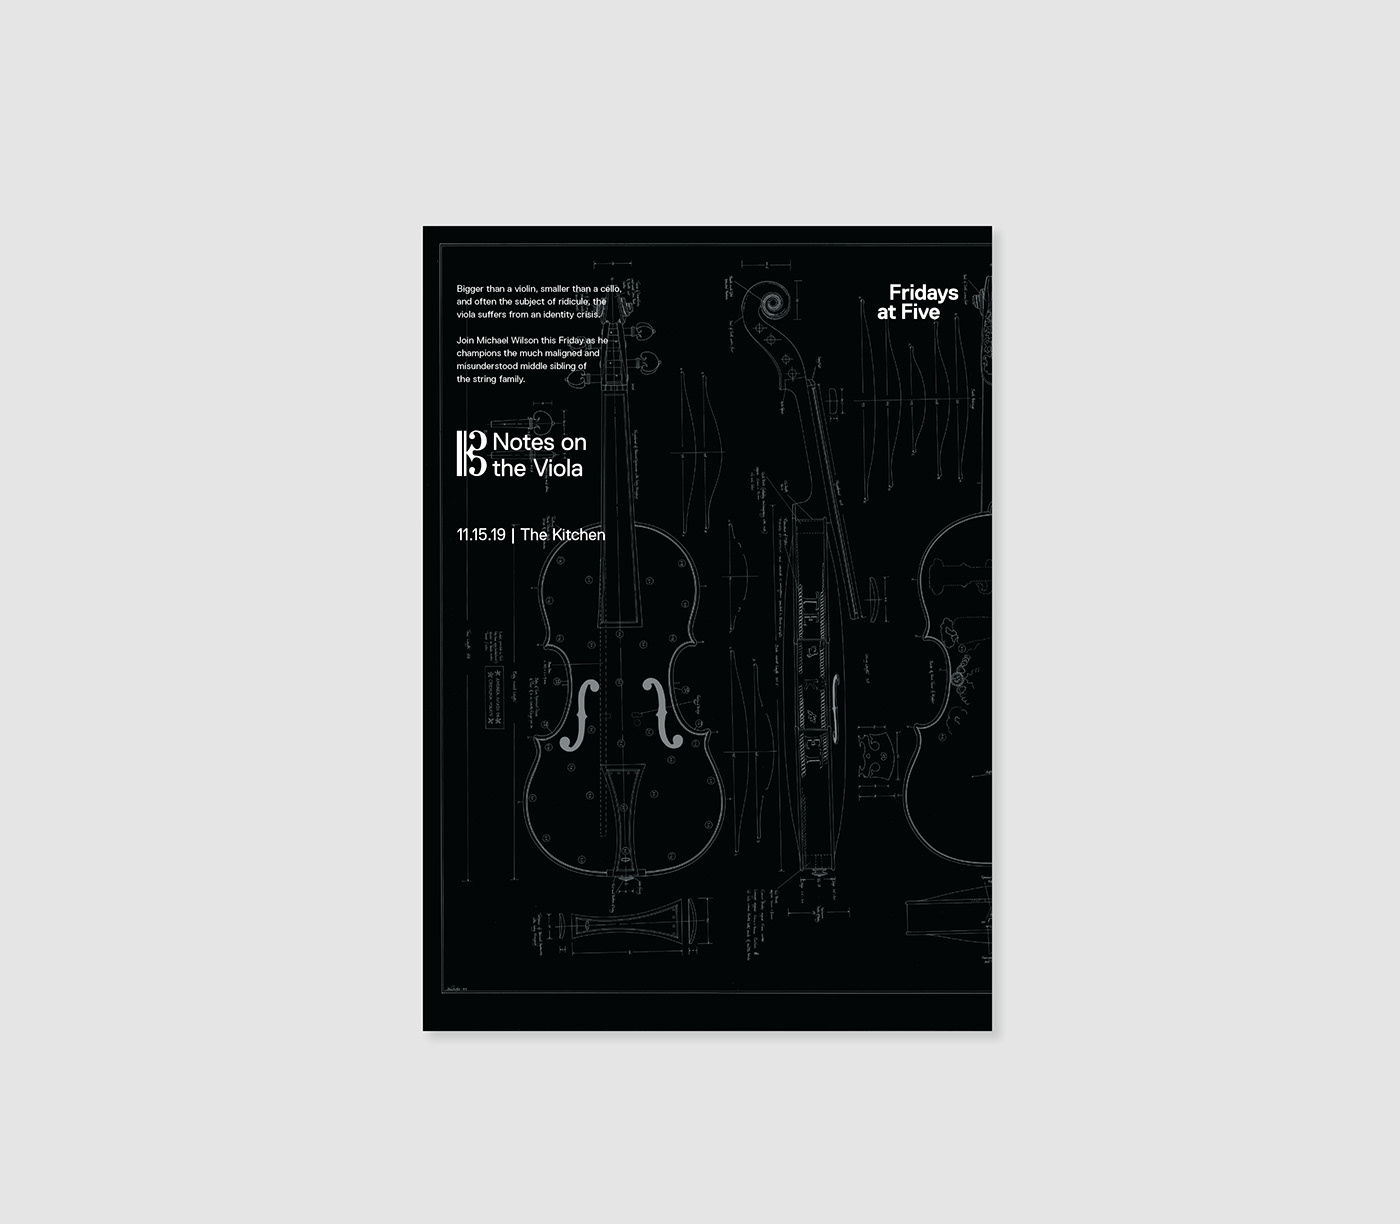 poster Grimshaw presentation Layout typography   Strcuture grid print experimental talk